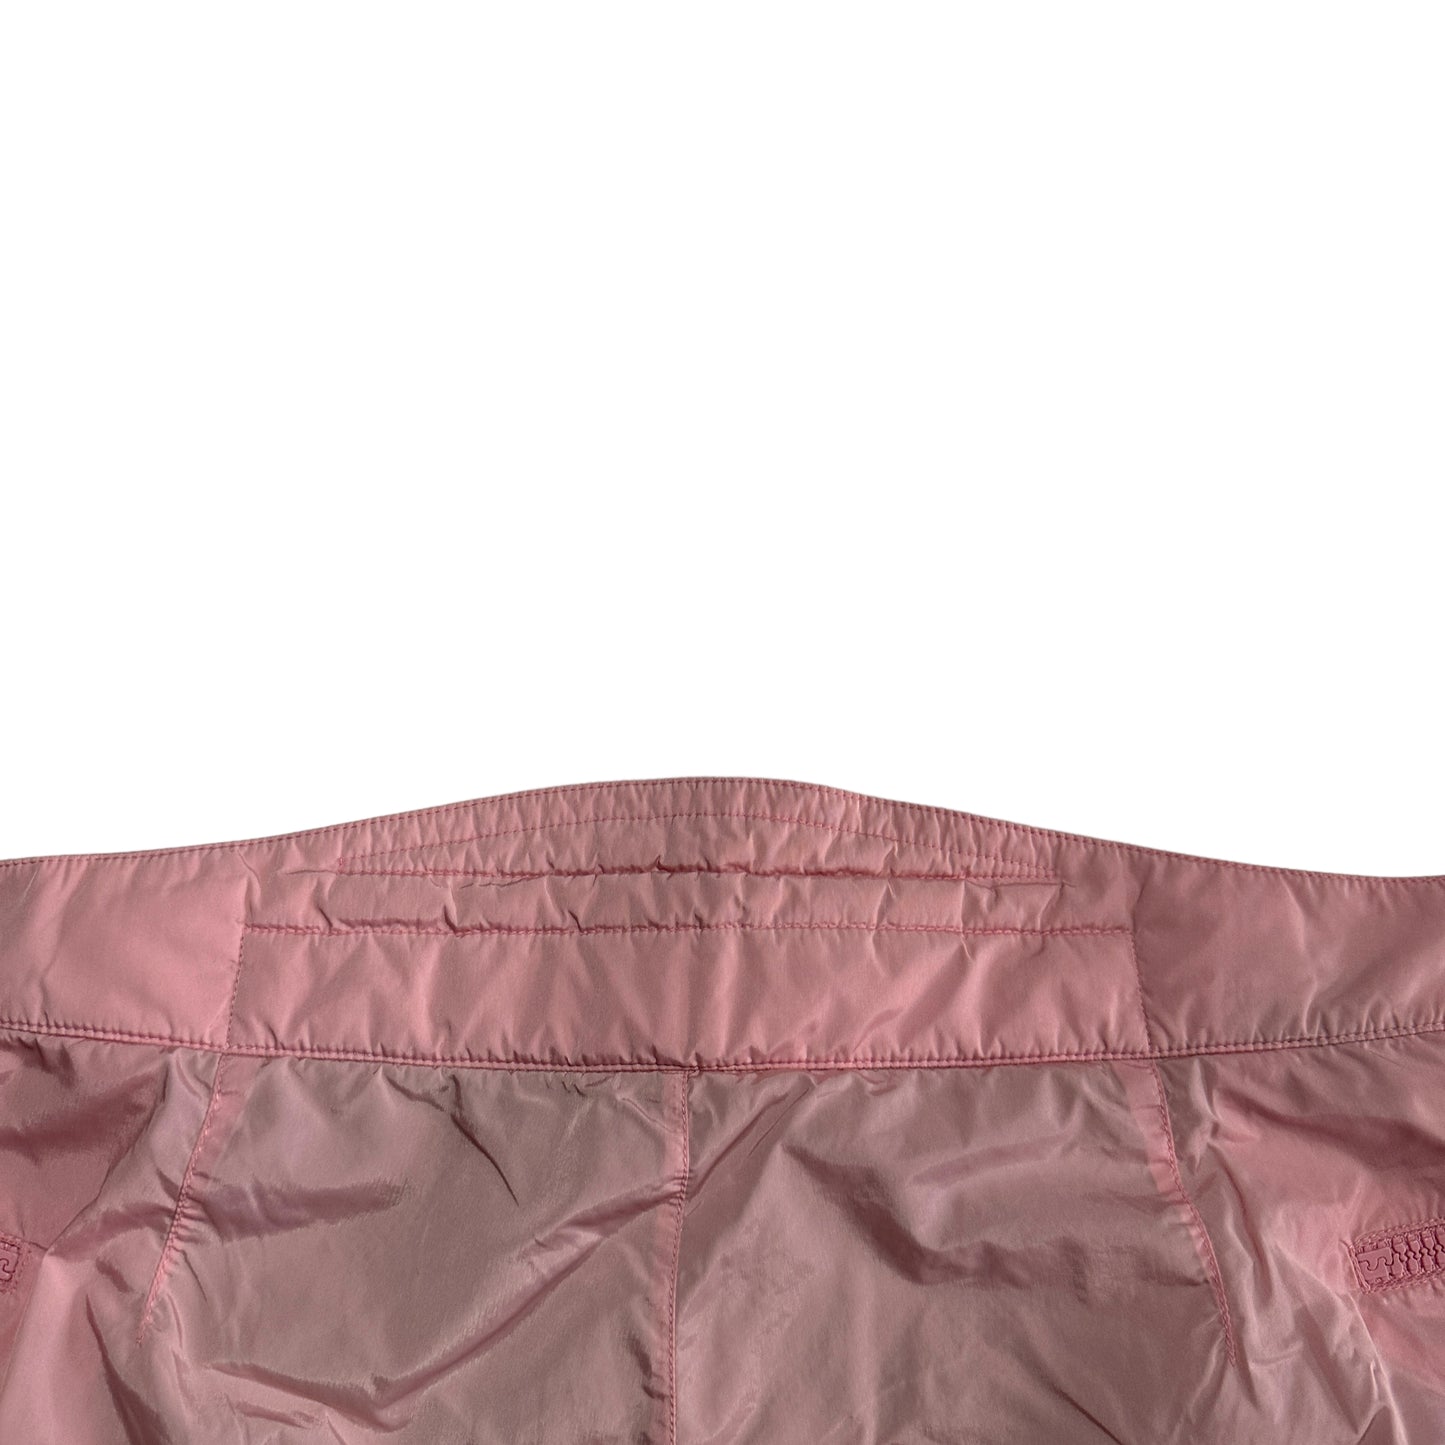 S/S 2000 Prada Sport Pink Shorts (40W)